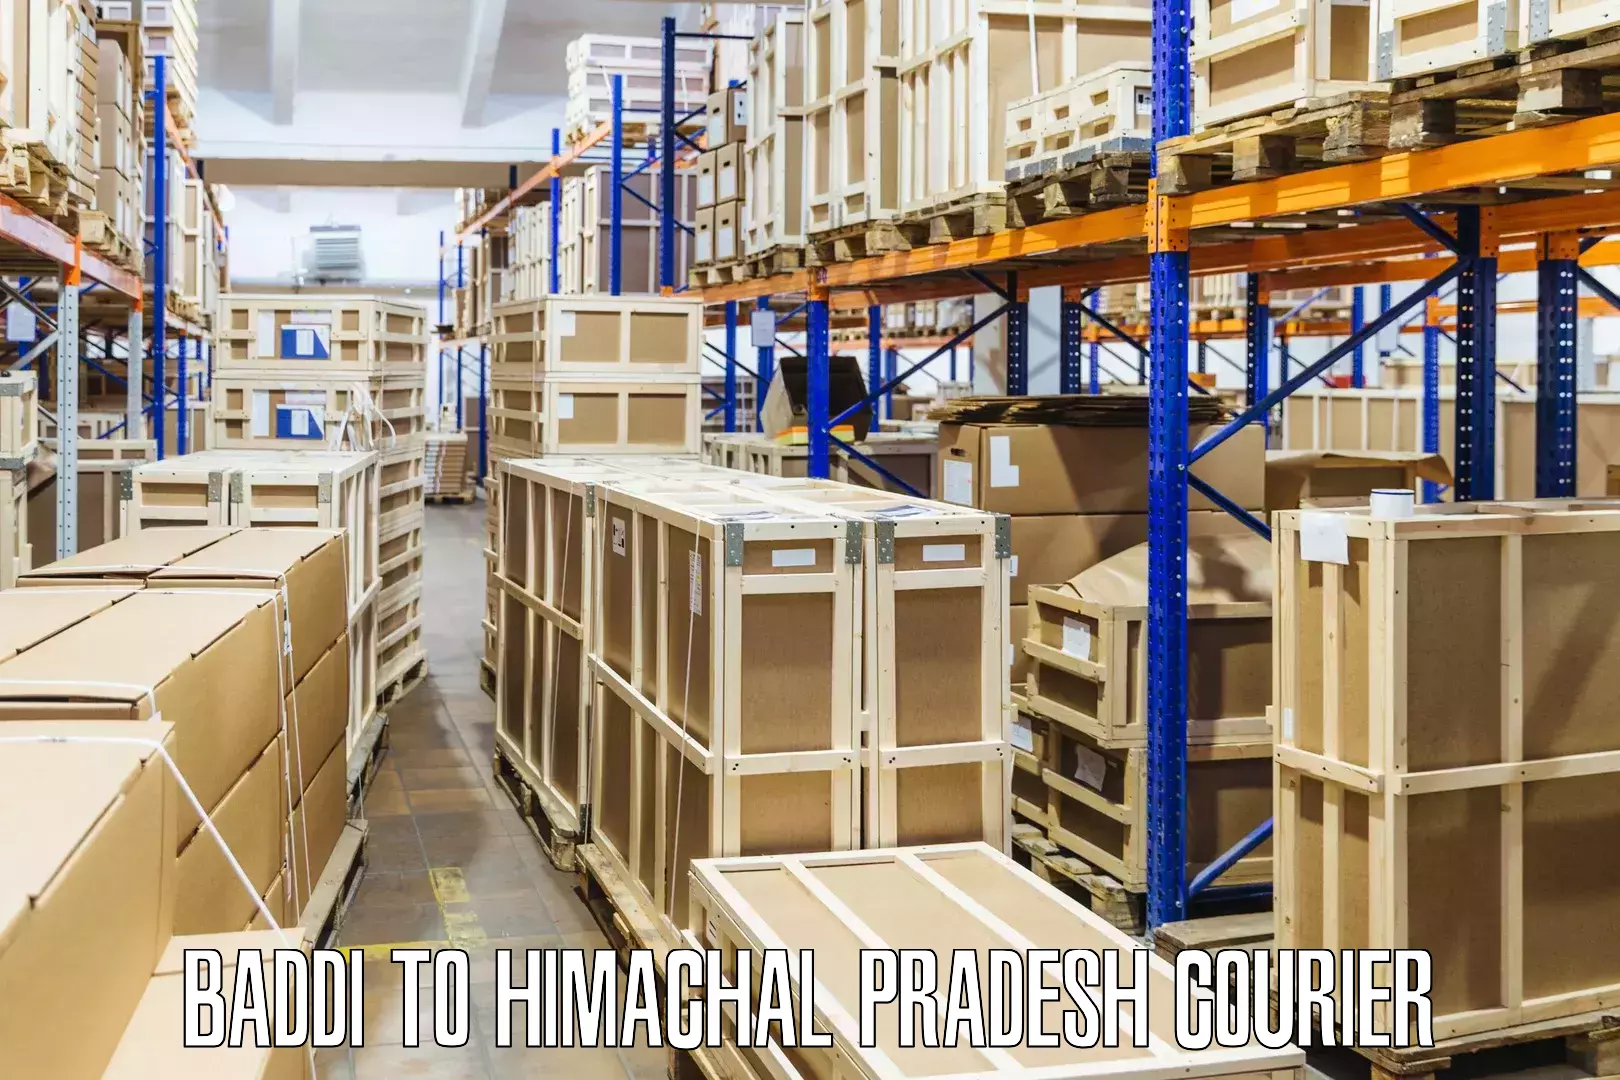 Global logistics network Baddi to Himachal Pradesh